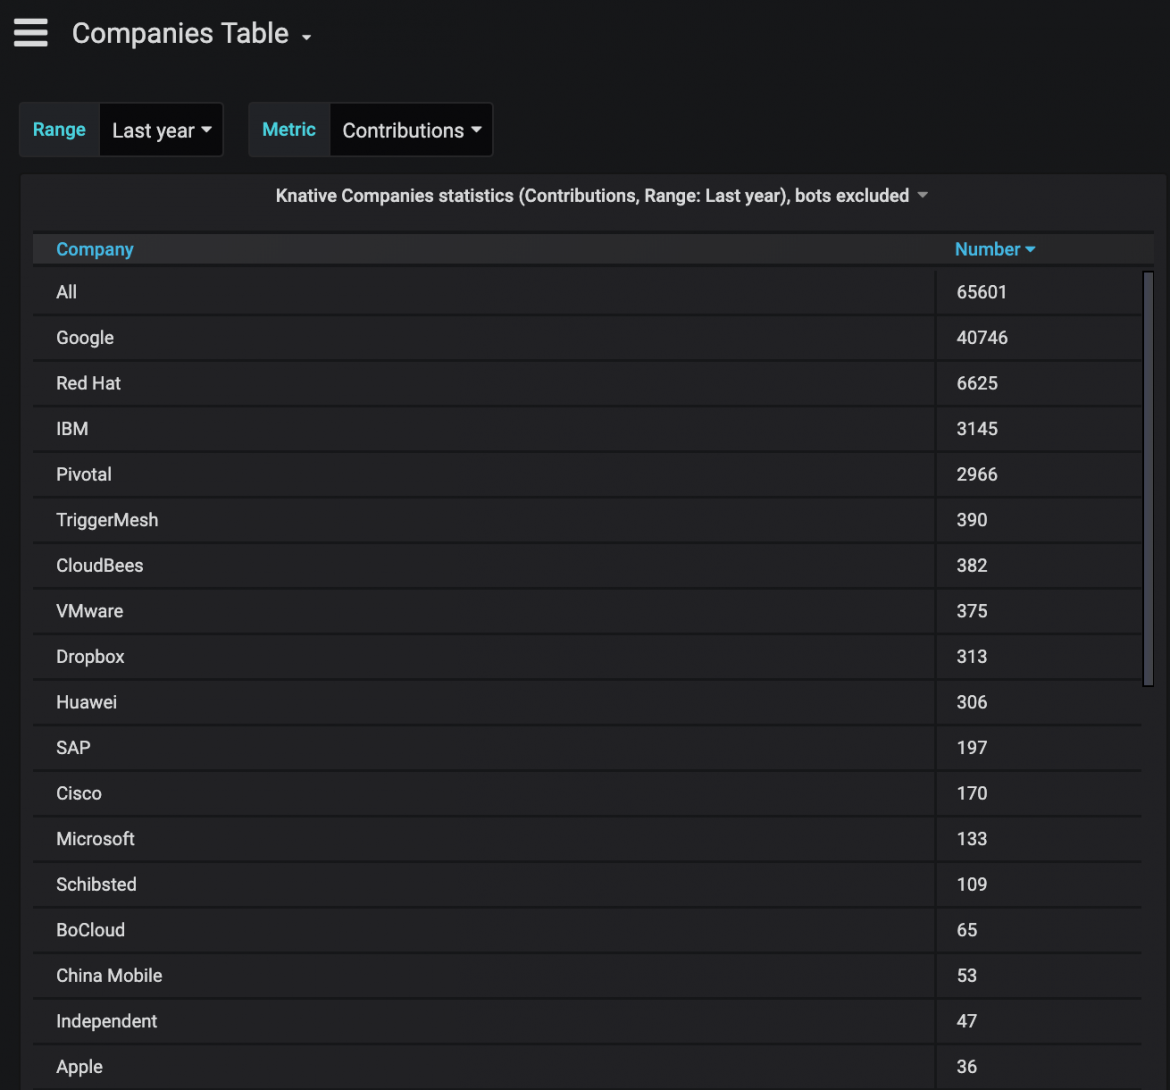 Knative company contributions as of July 15, 2019 